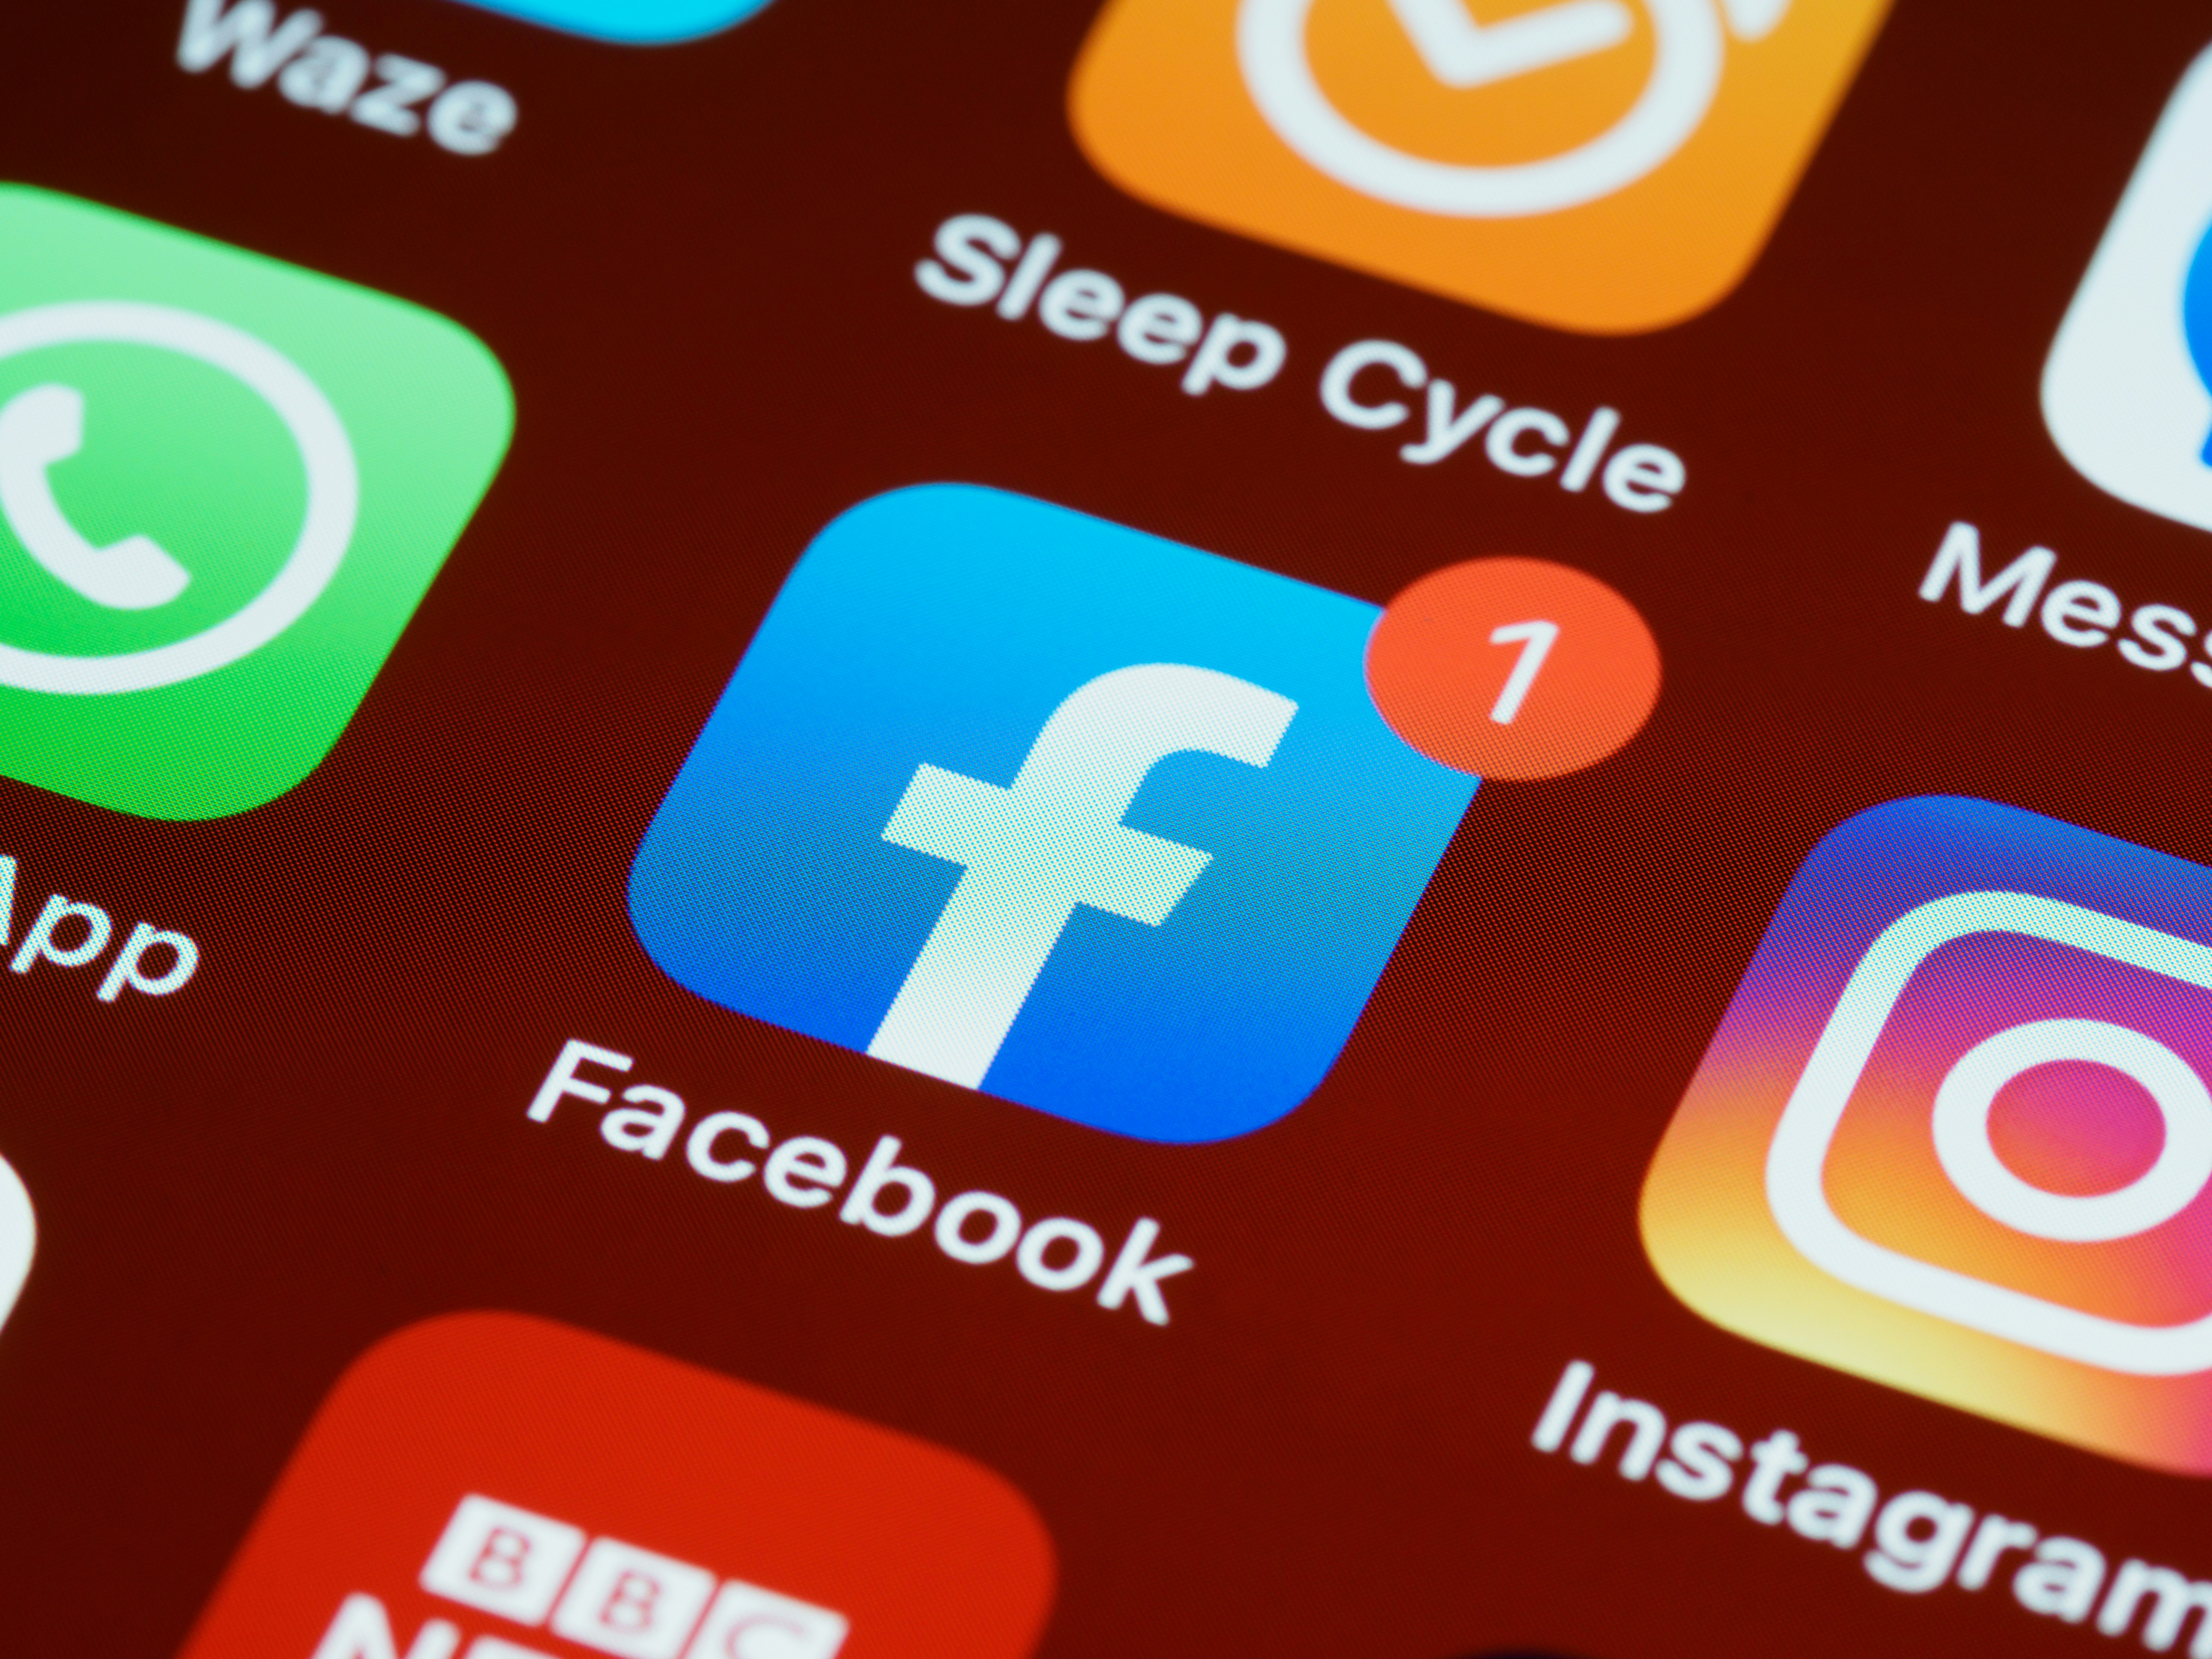 WhatsApp Status, Instagram Stories, Facebook Stories ou Snapchat?